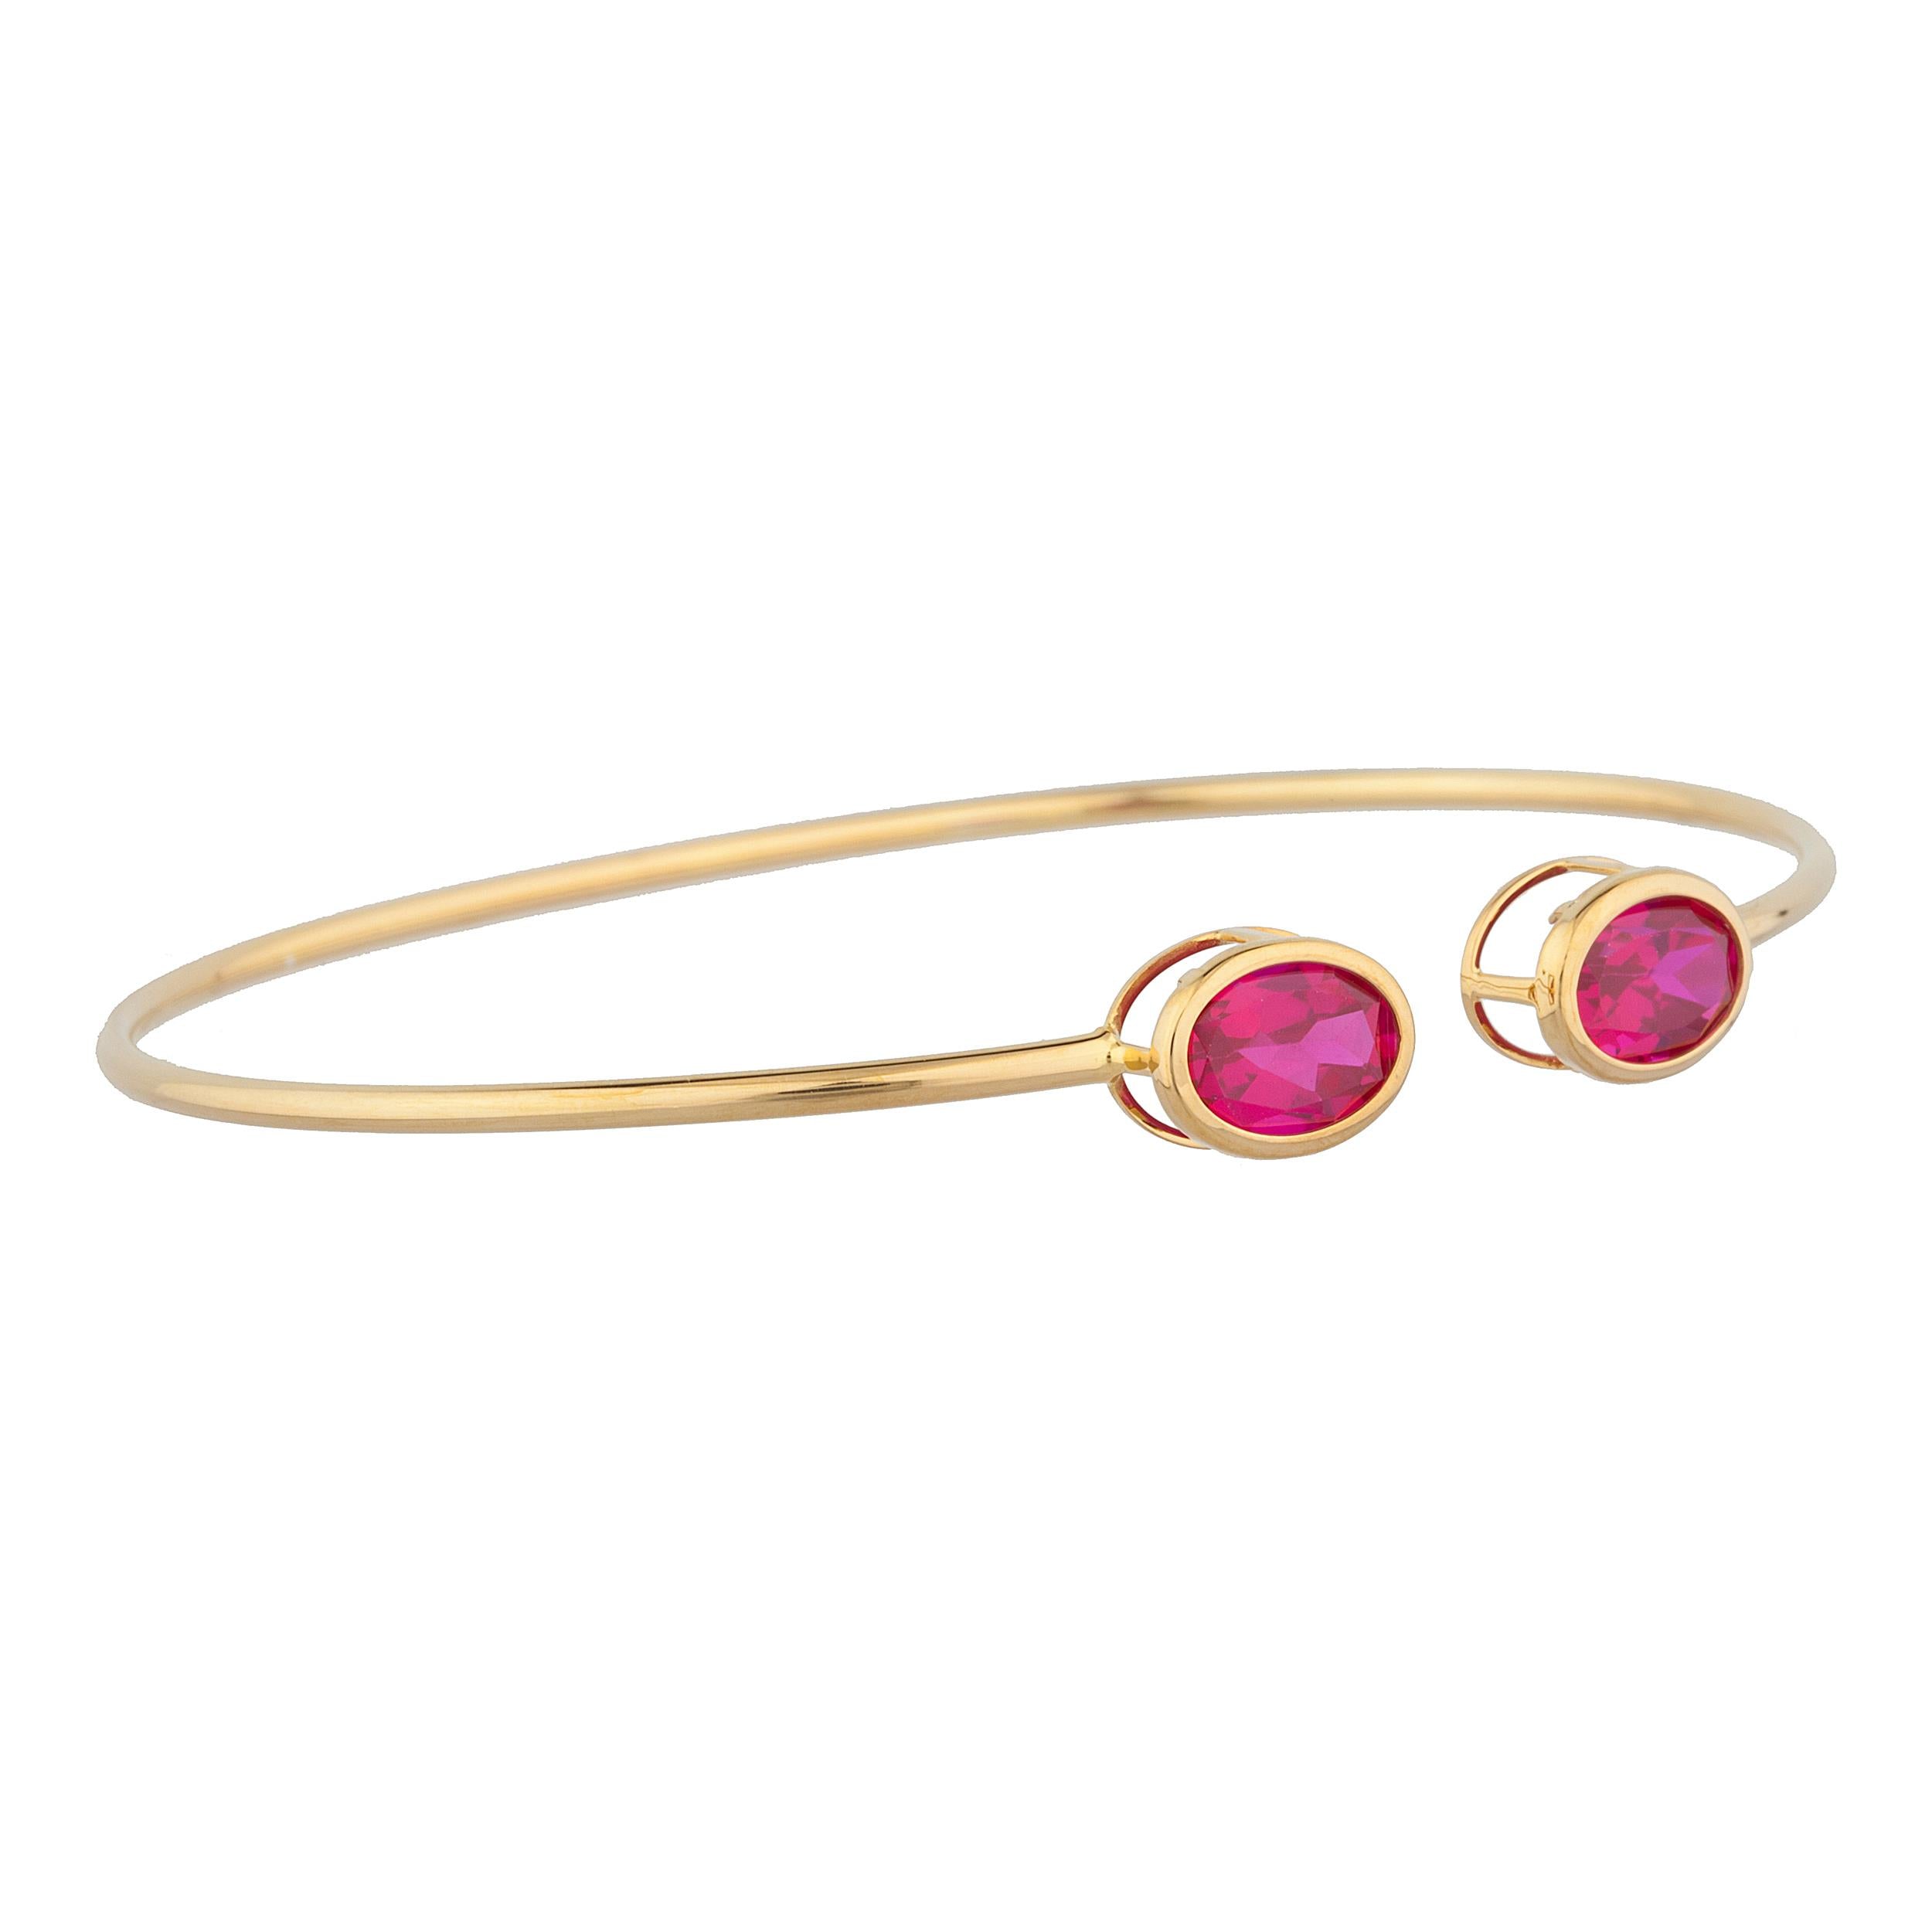 14Kゴールド製ルビーラウンドベゼルバングルブレスレット Elizabeth Jewelry Round Ruby Gold Bezel Bangle  Bracelet 14Kt Created